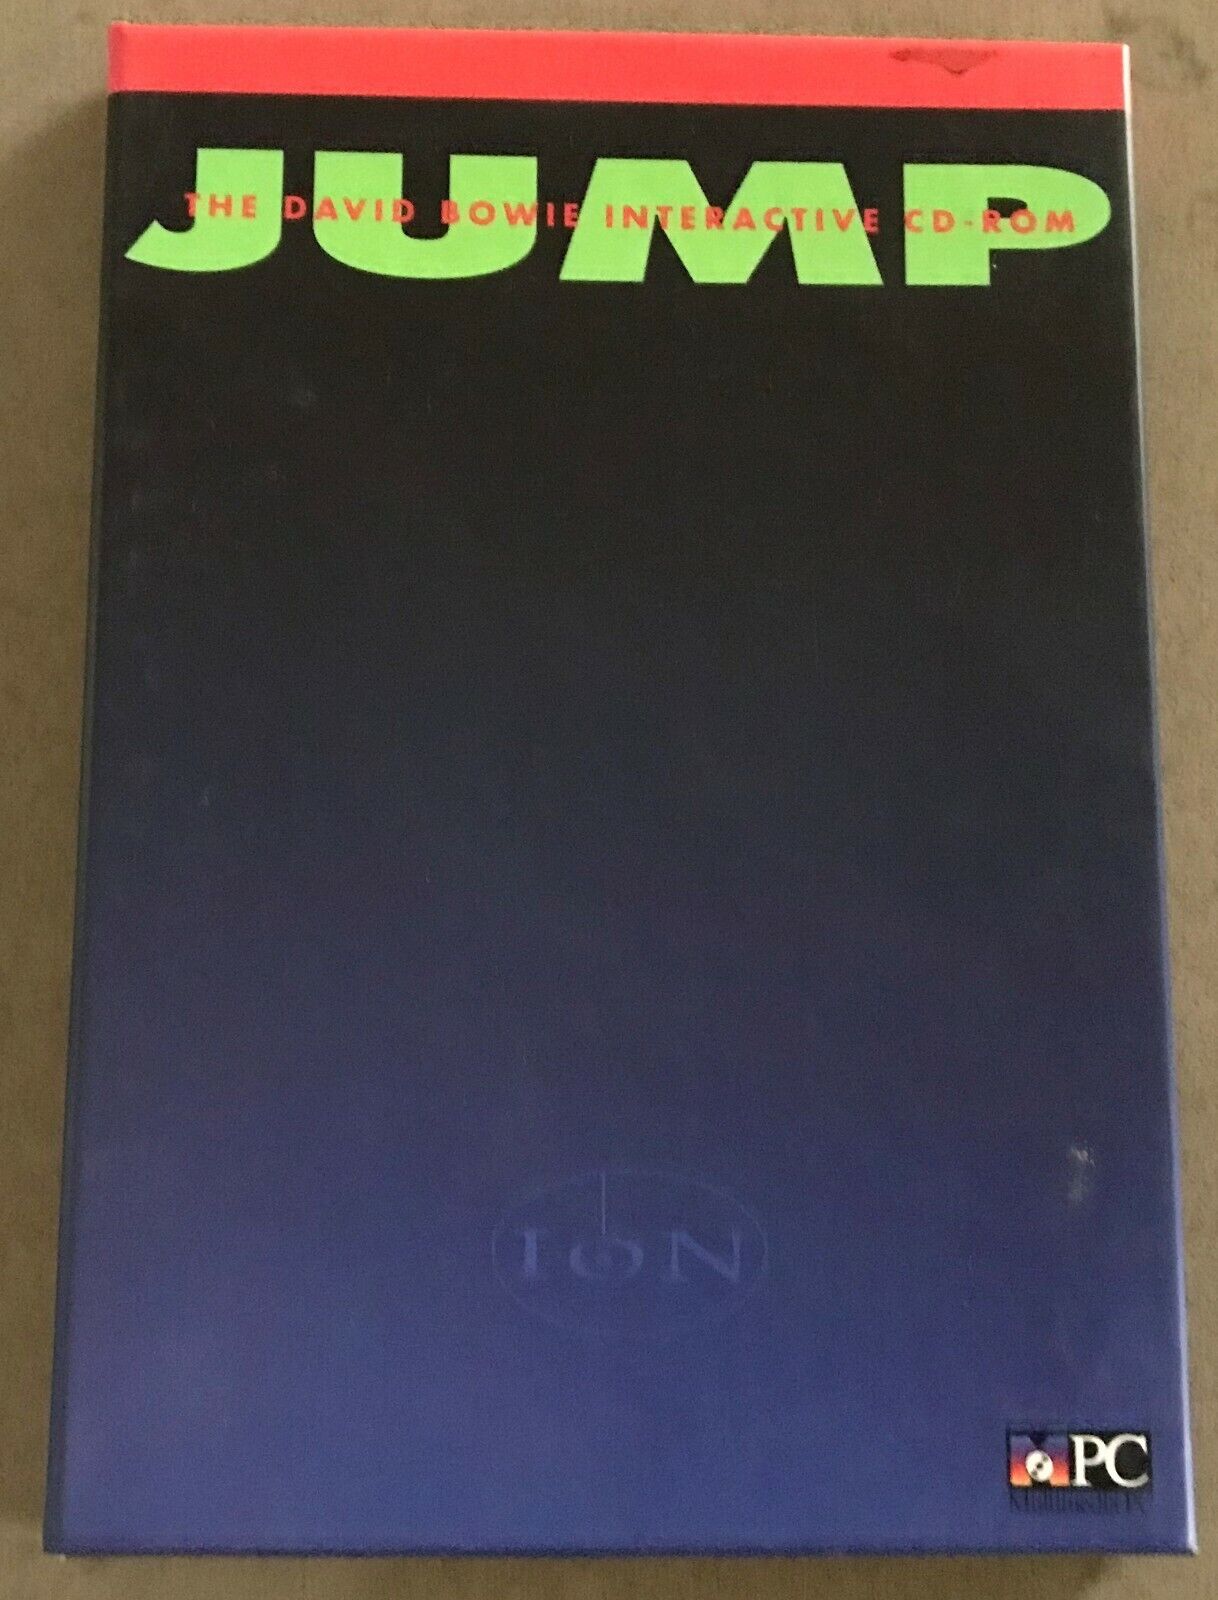 JUMP - DAVID BOWIE INTERACTIVE CD ROM - NEW - Never played - ORIGINAL BOX